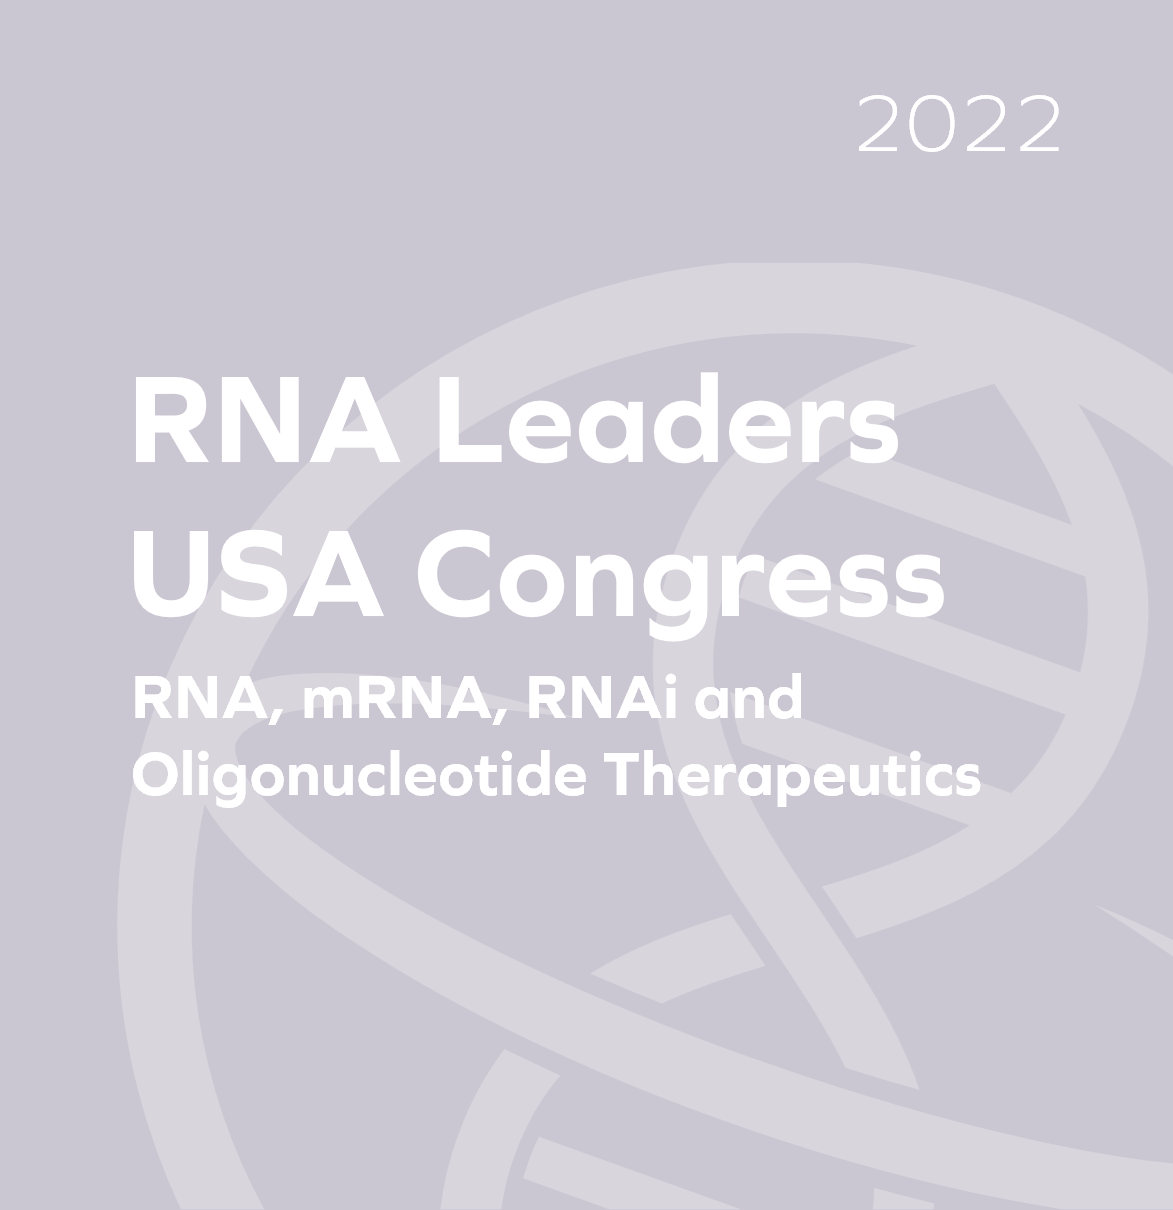 RNA Leaders USA Congress